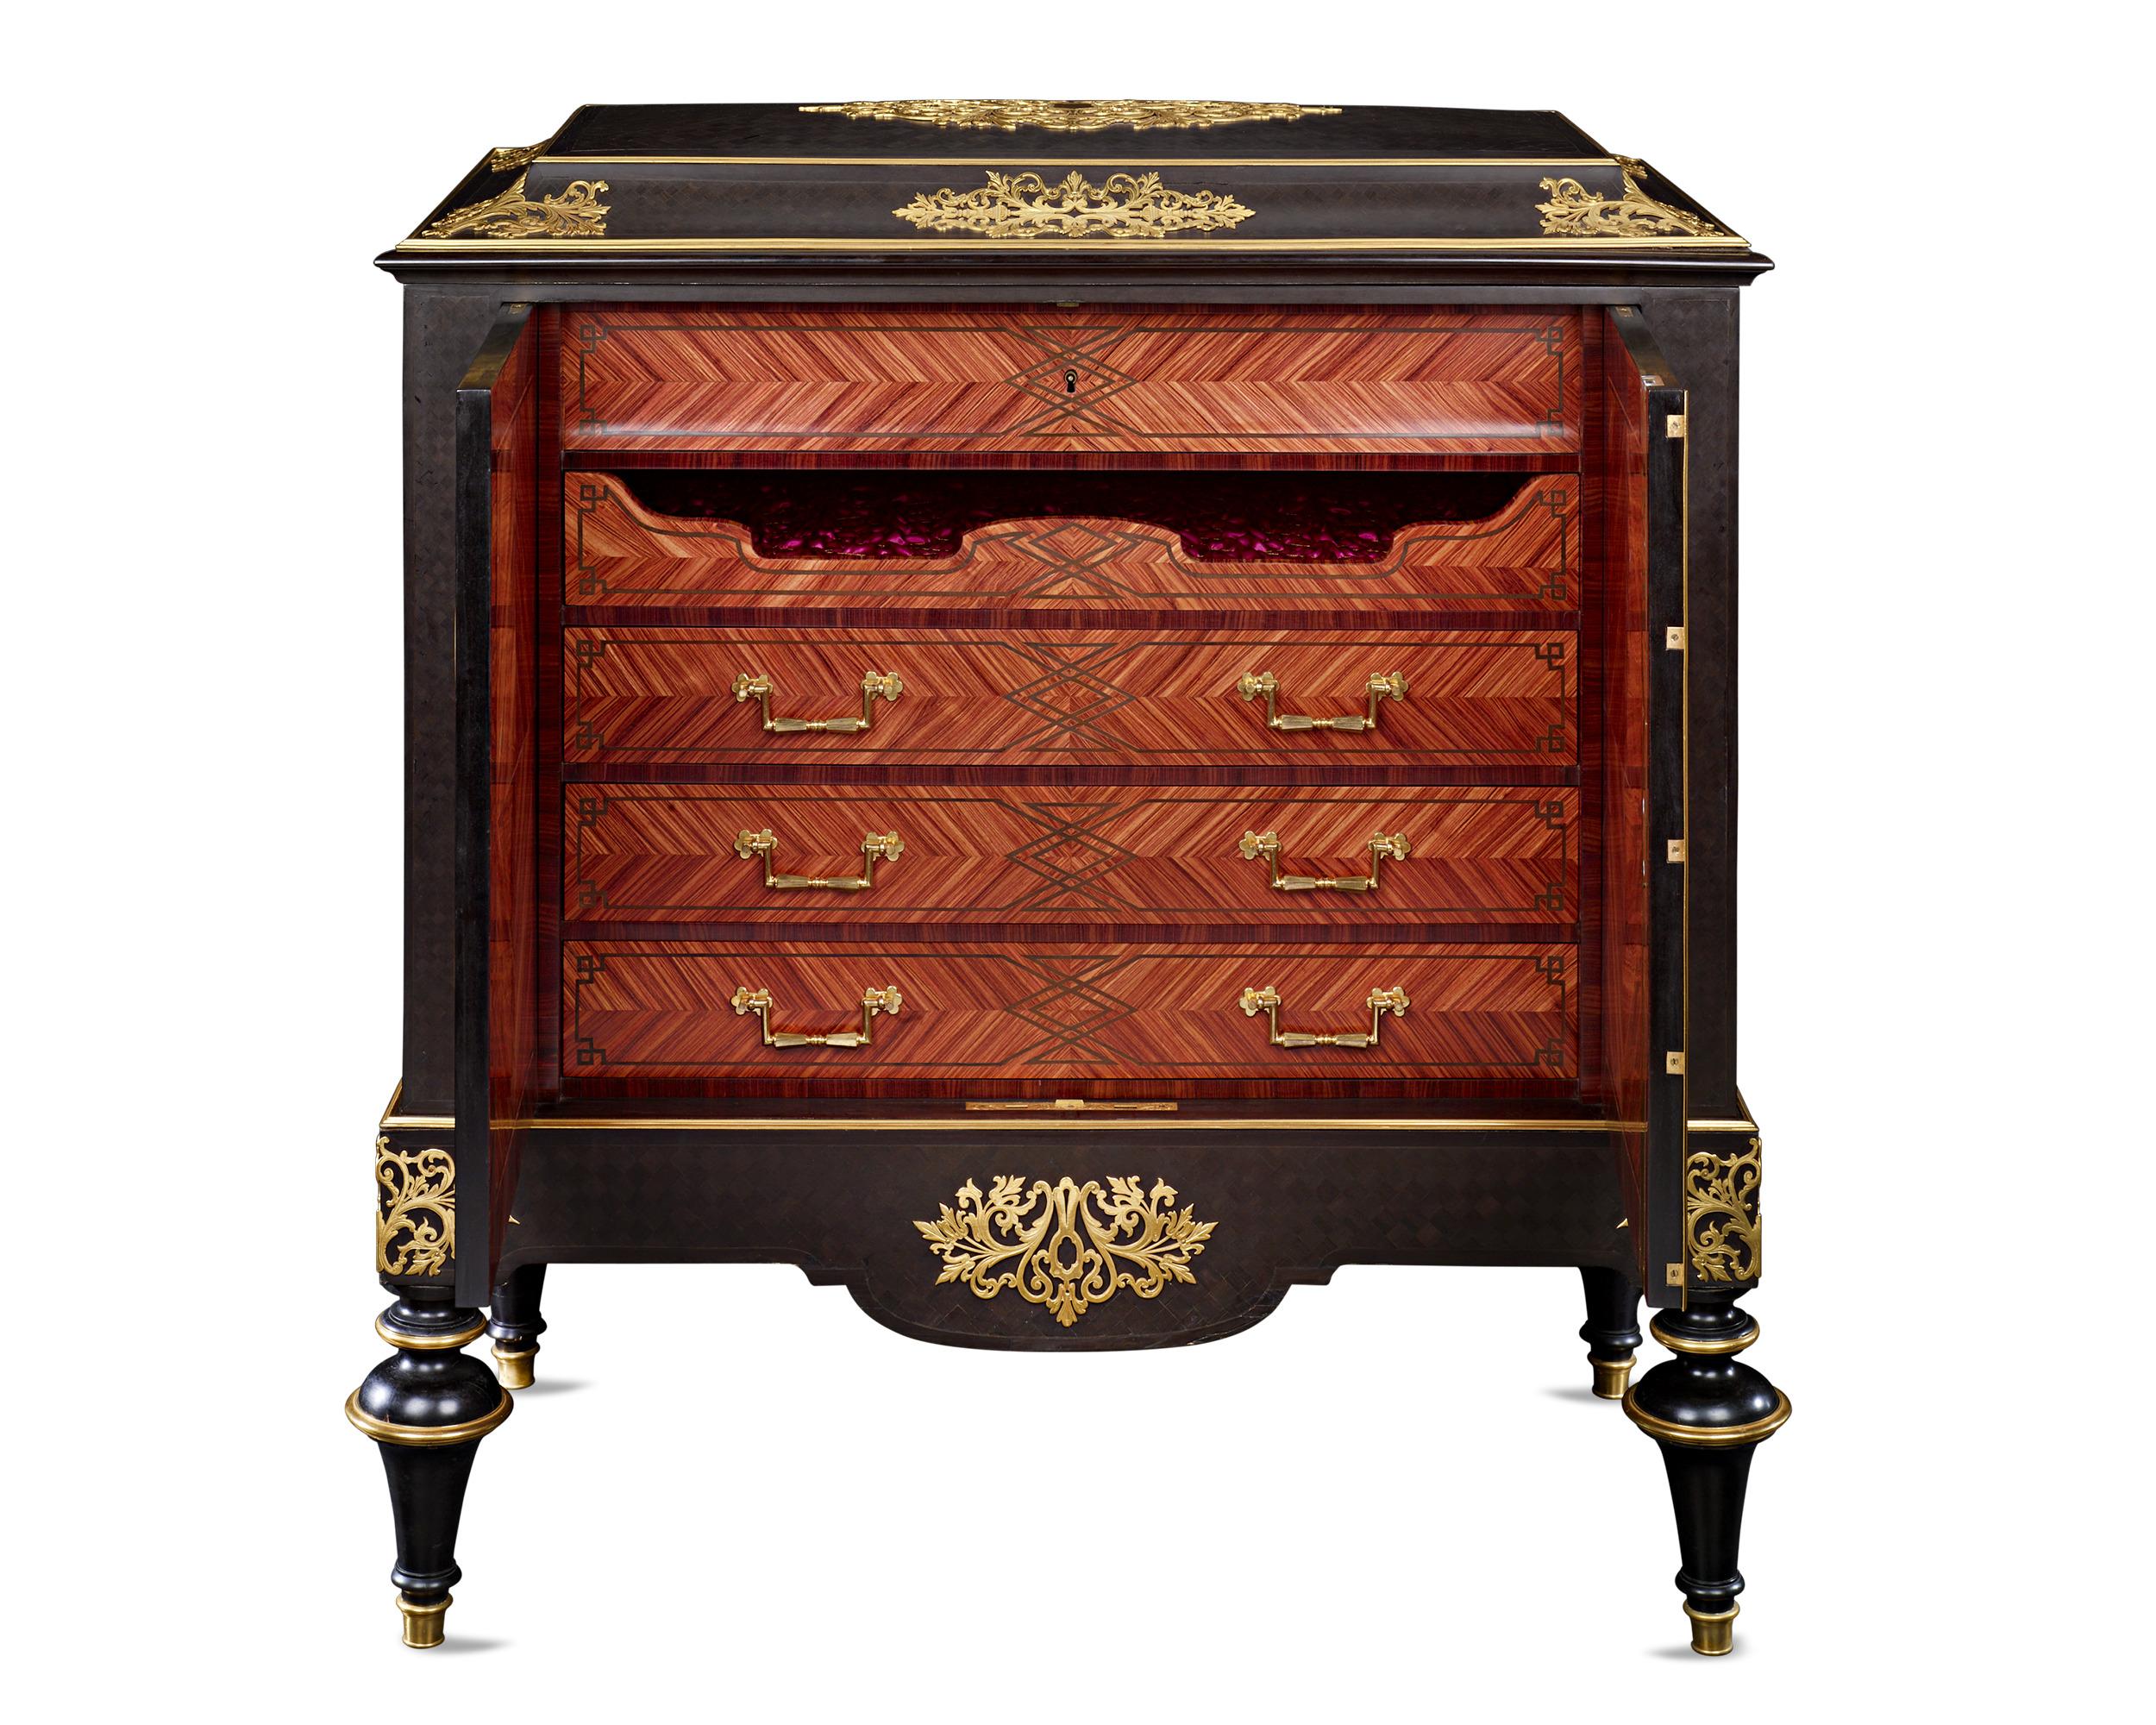 French Second Empire Ormolu and Ebony Jewelry Cabinet by Giroux